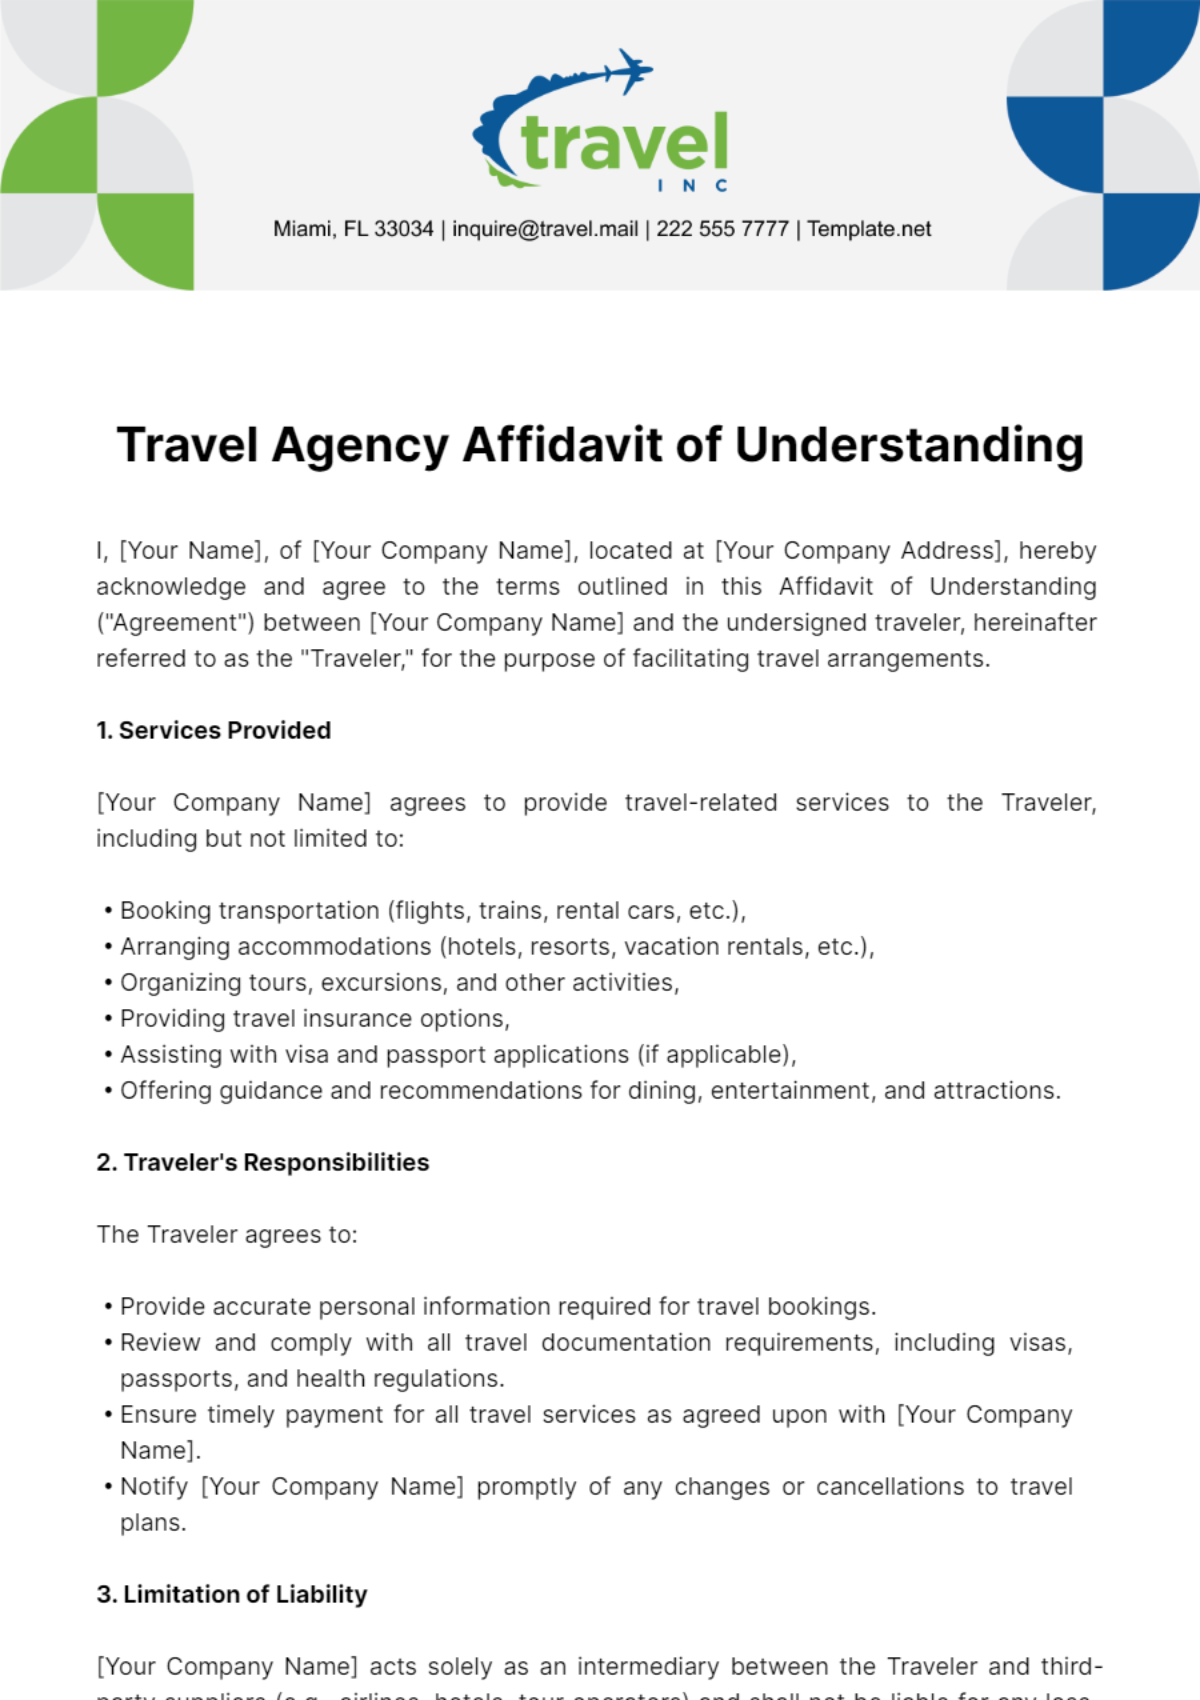 Travel Agency Affidavit of Understanding Template